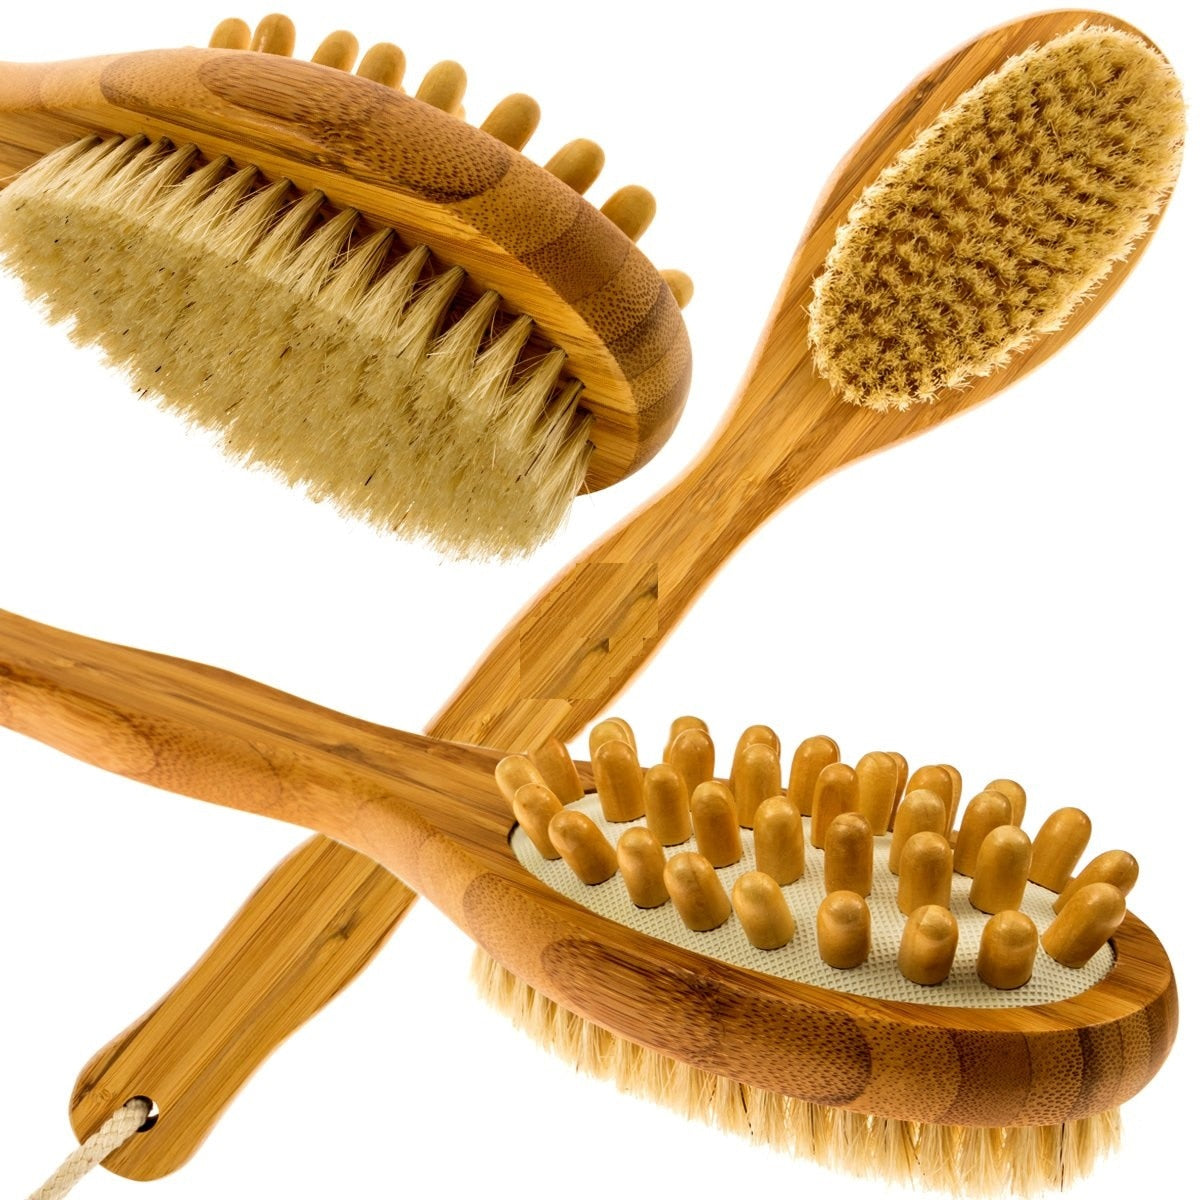 BambooBreeze Back Scrub Shower Brush: Invigorating Renewal for Your Skin